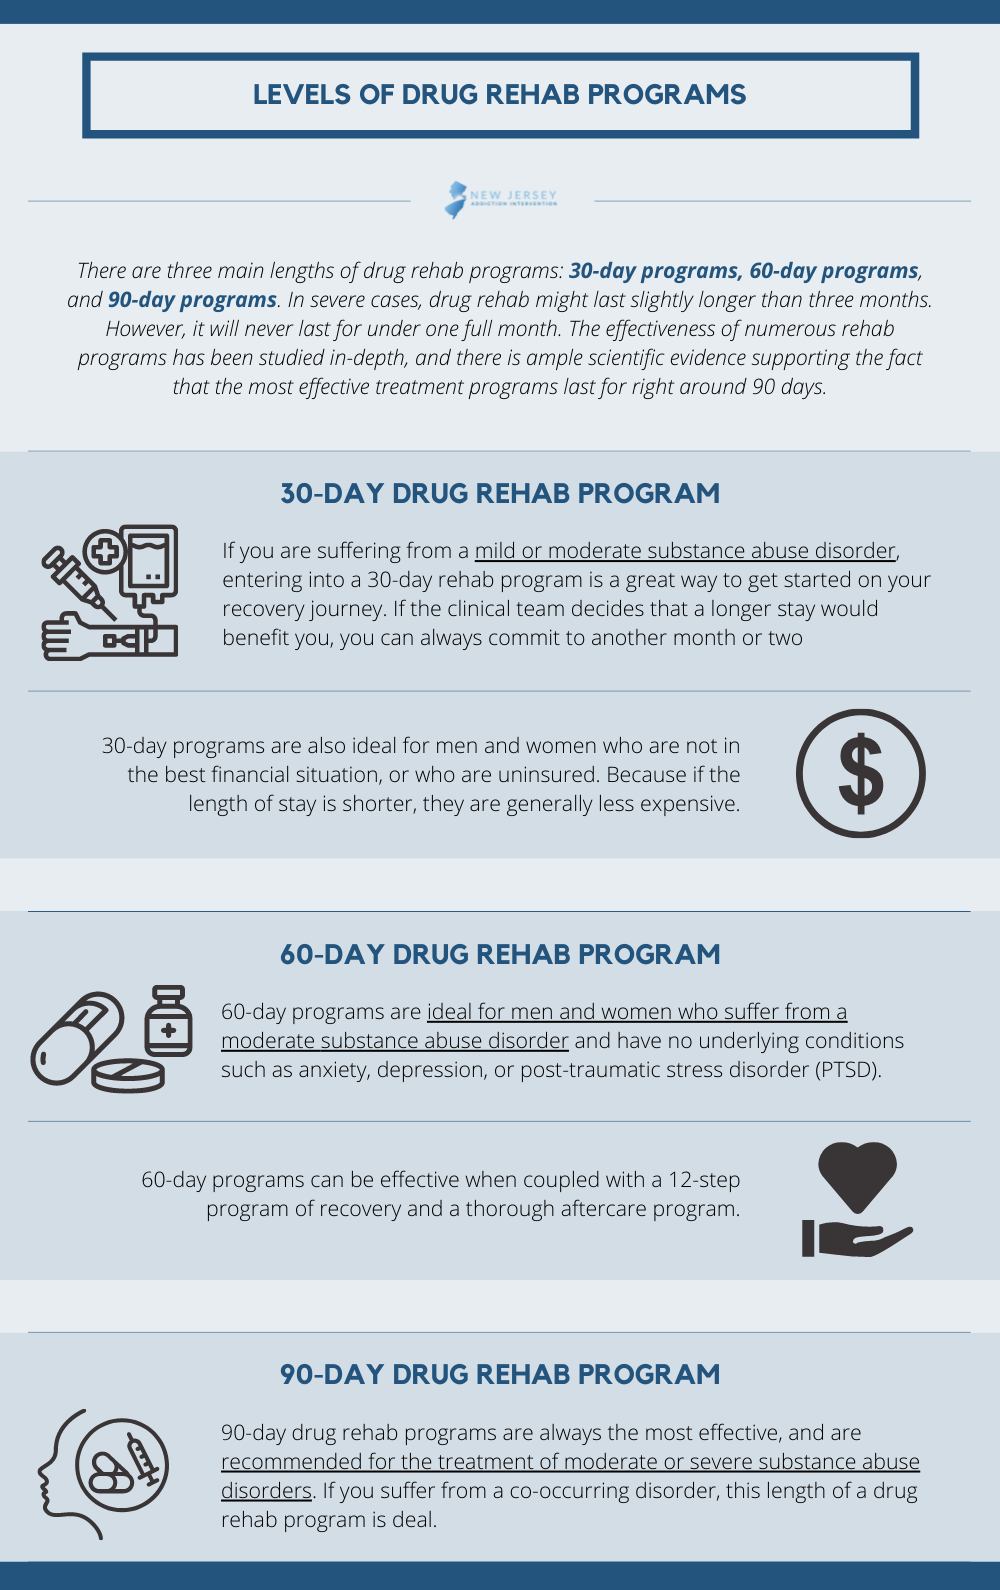 Levels of Drug Rehab Programs